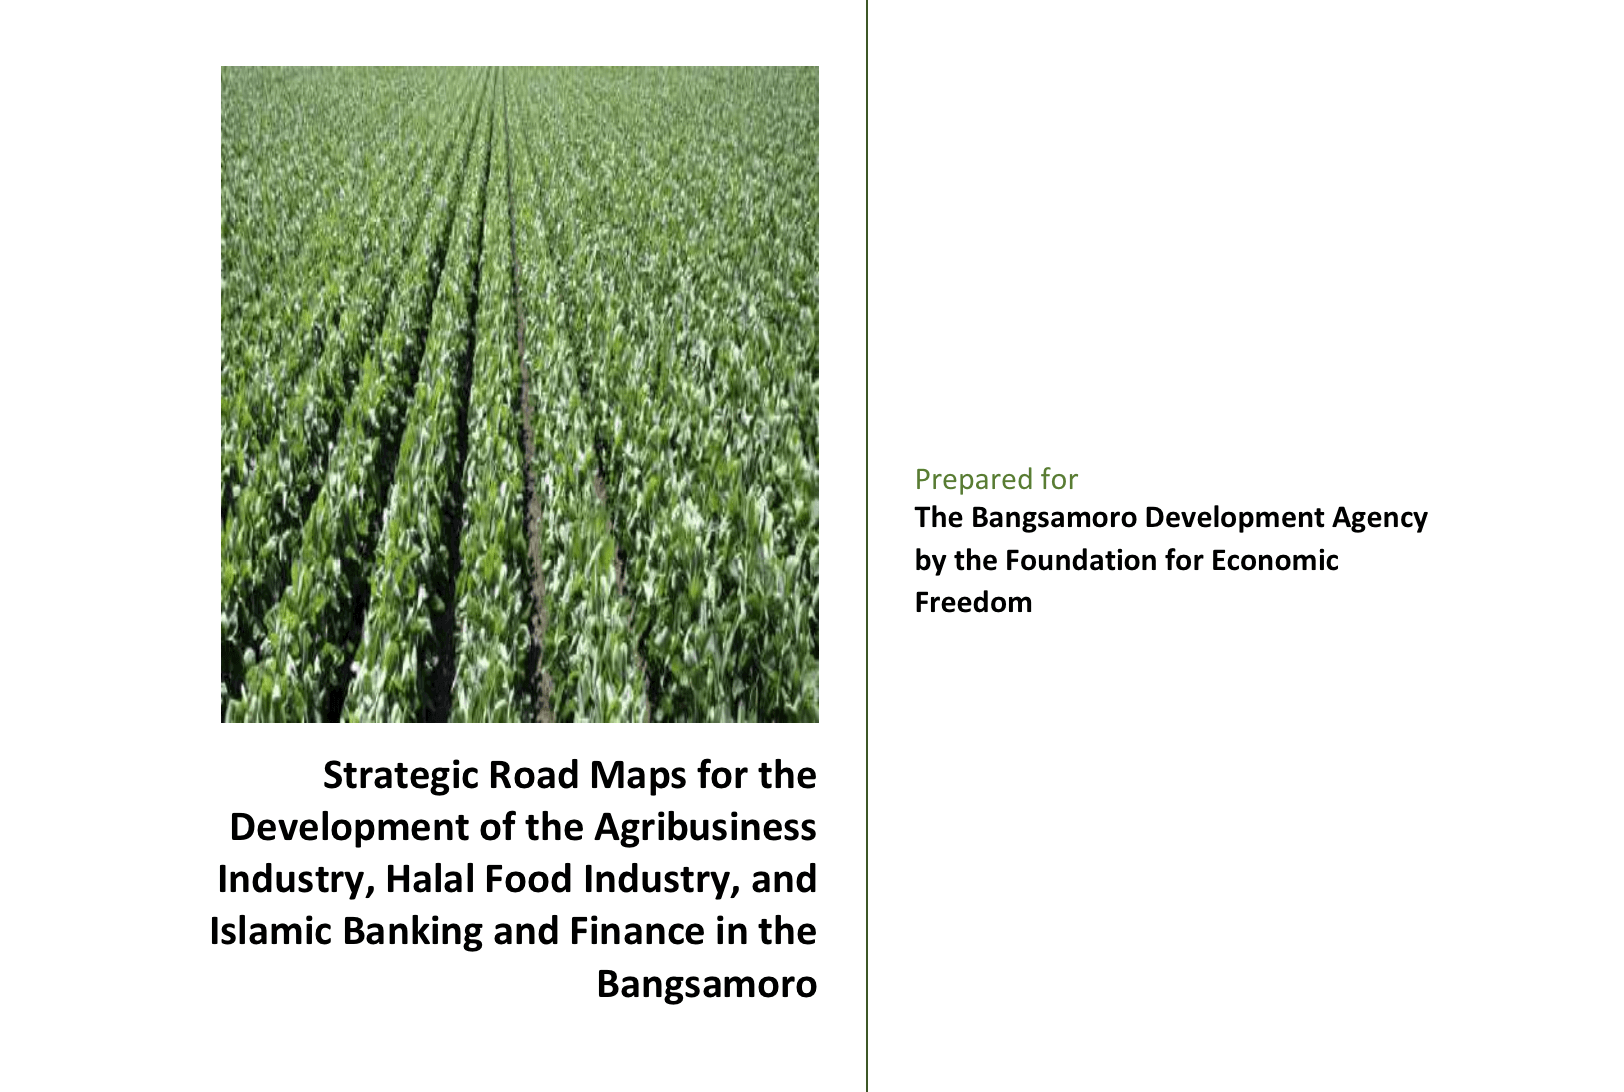 Strategic Road Maps for the Development of the Bangsamoro